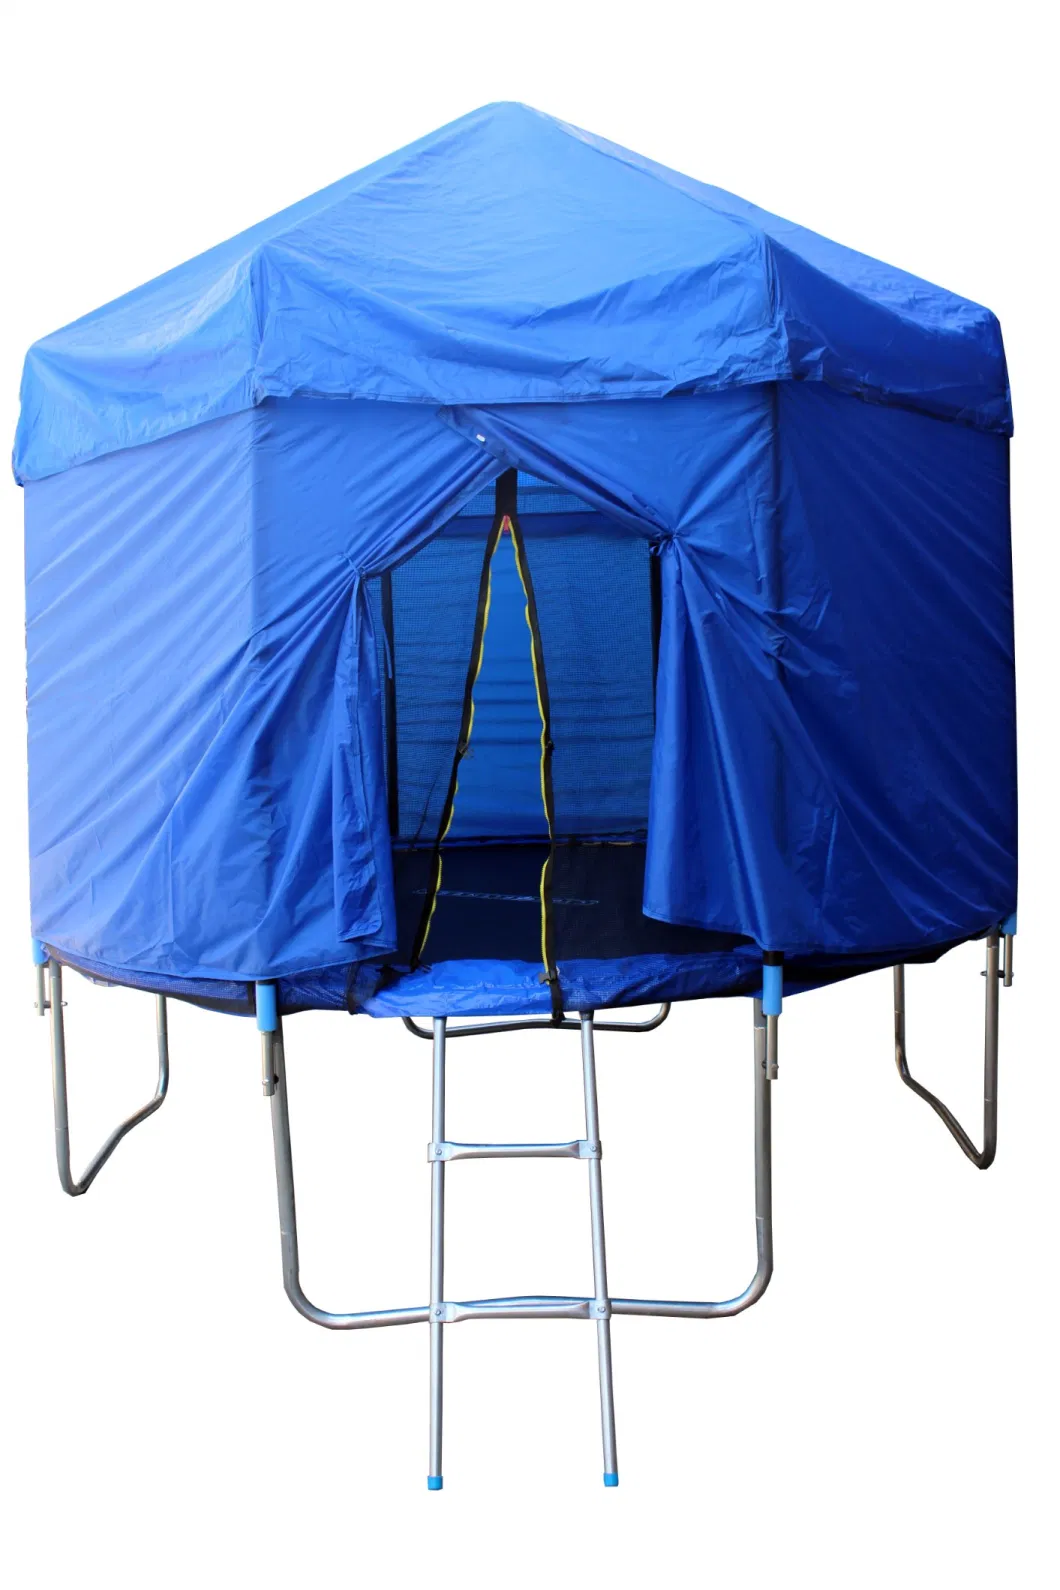 8FT Garden Trampoline Outdoor Trampoline with Tent